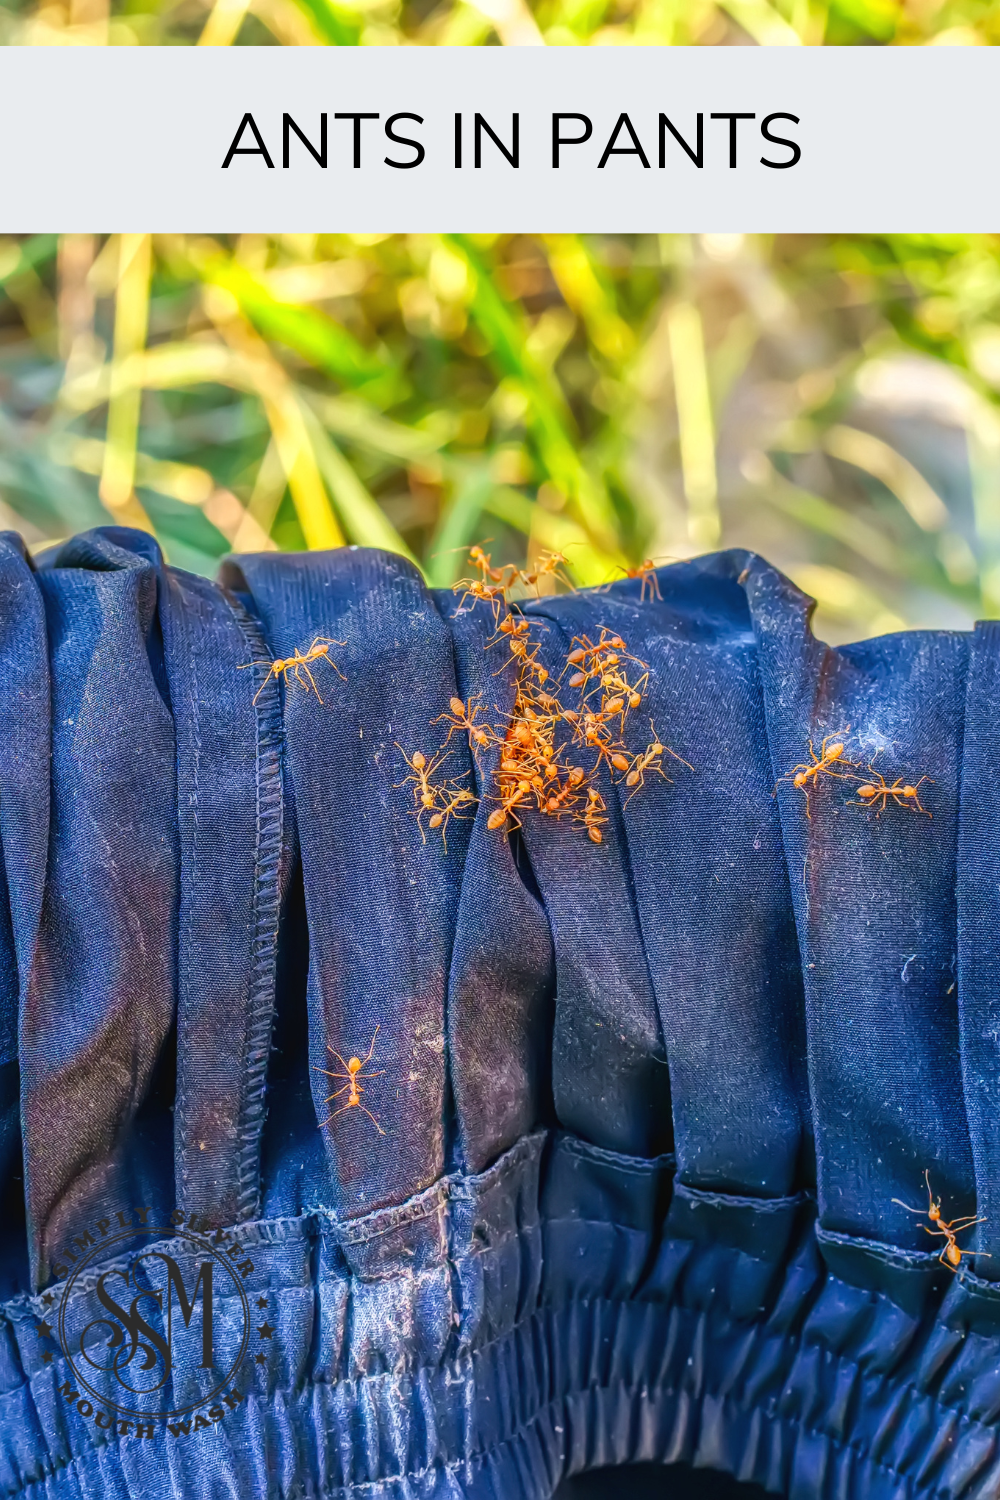 Ant's in pants